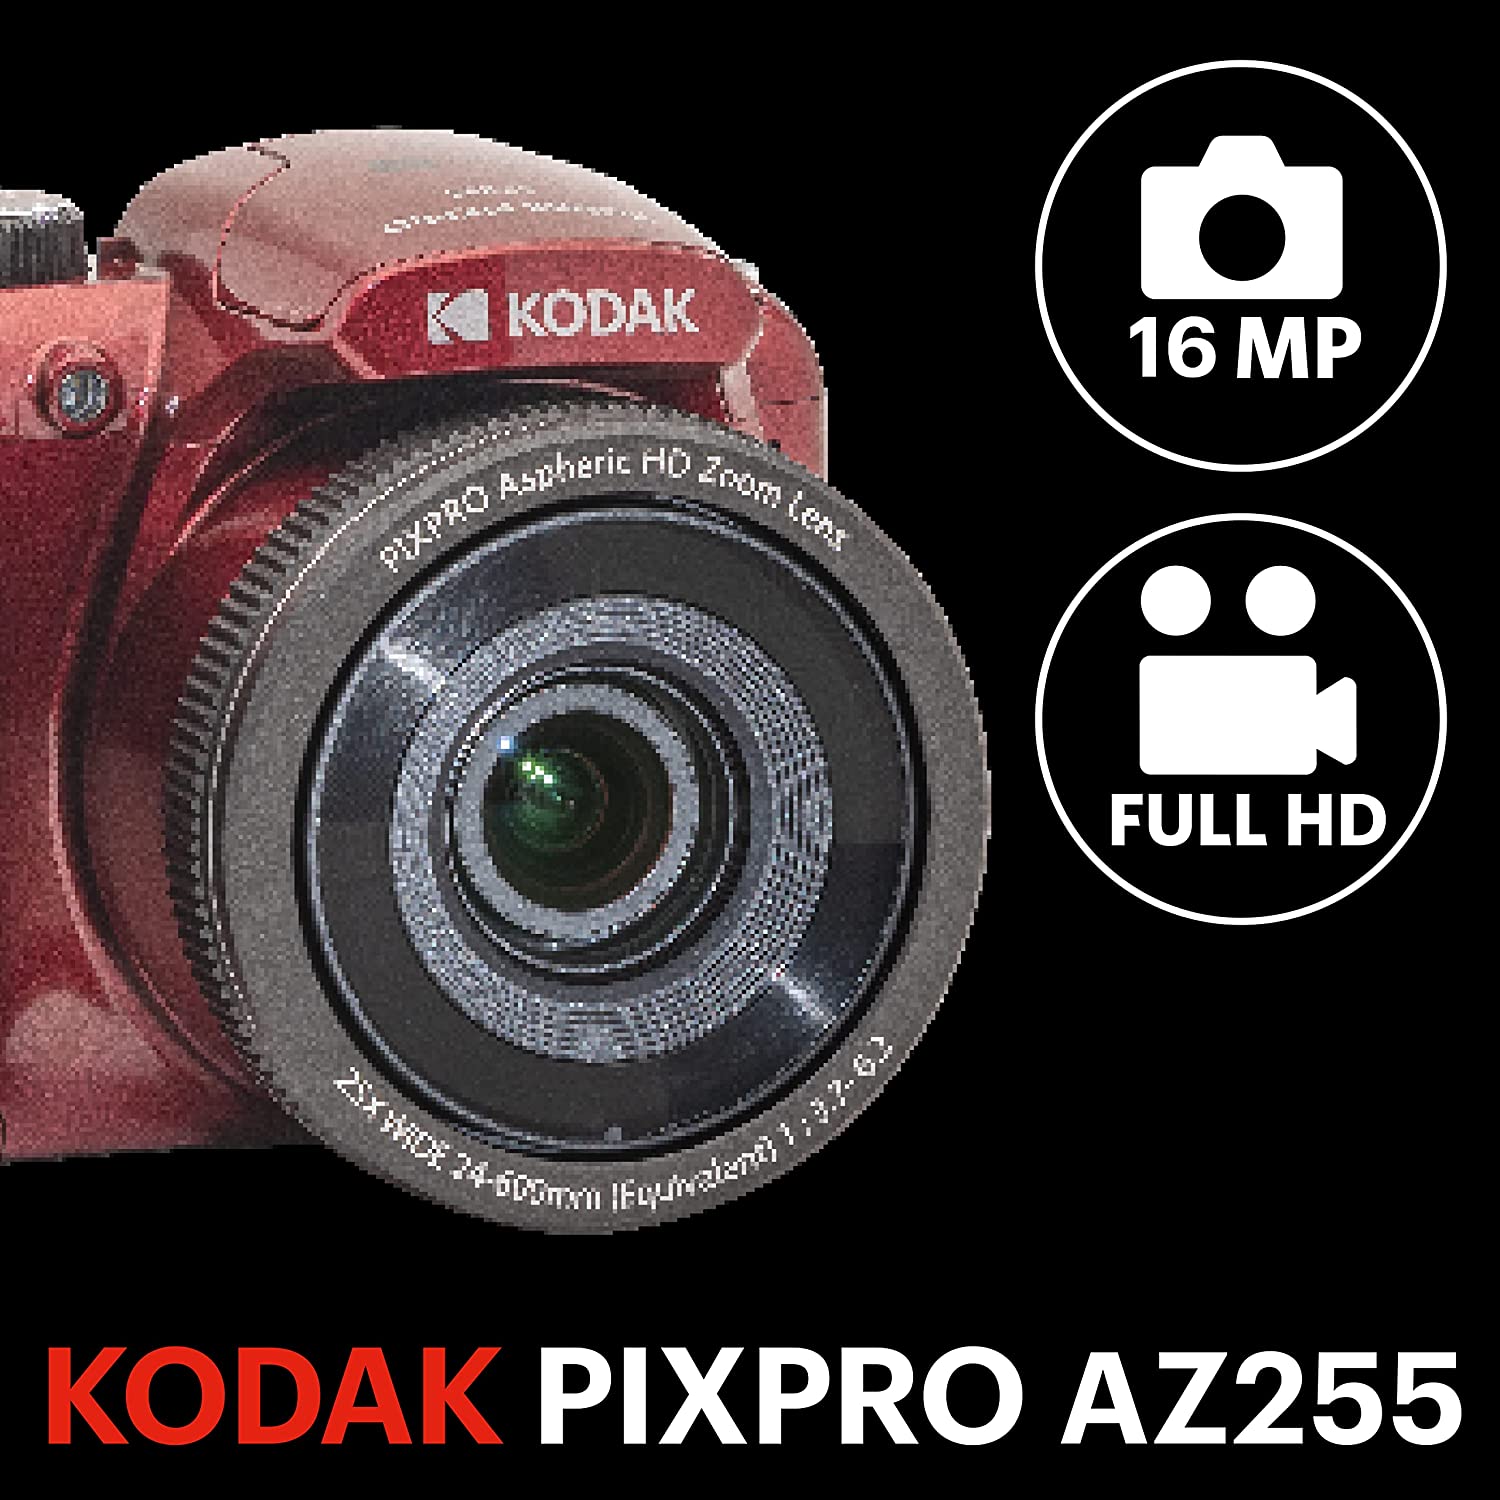 دوربین عکاسی مدل KODAK PIXPRO AZ255-RD 16MP - ارسال 10 الی 15 روز کاری